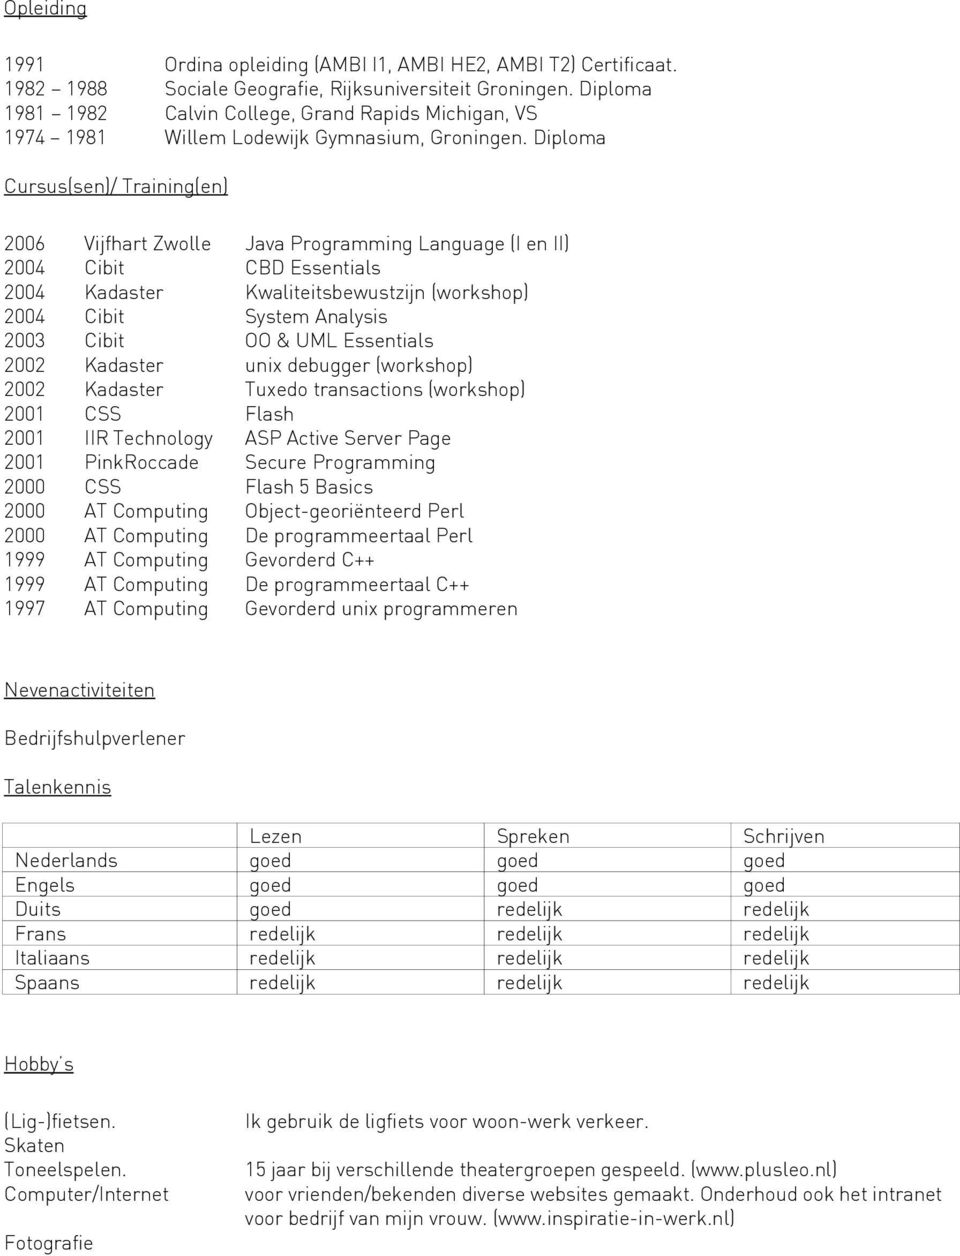 Diploma Cursus(sen)/ Training(en) 2006 Vijfhart Zwolle Java Programming Language (I en II) 2004 Cibit CBD Essentials 2004 Kadaster Kwaliteitsbewustzijn (workshop) 2004 Cibit System Analysis 2003